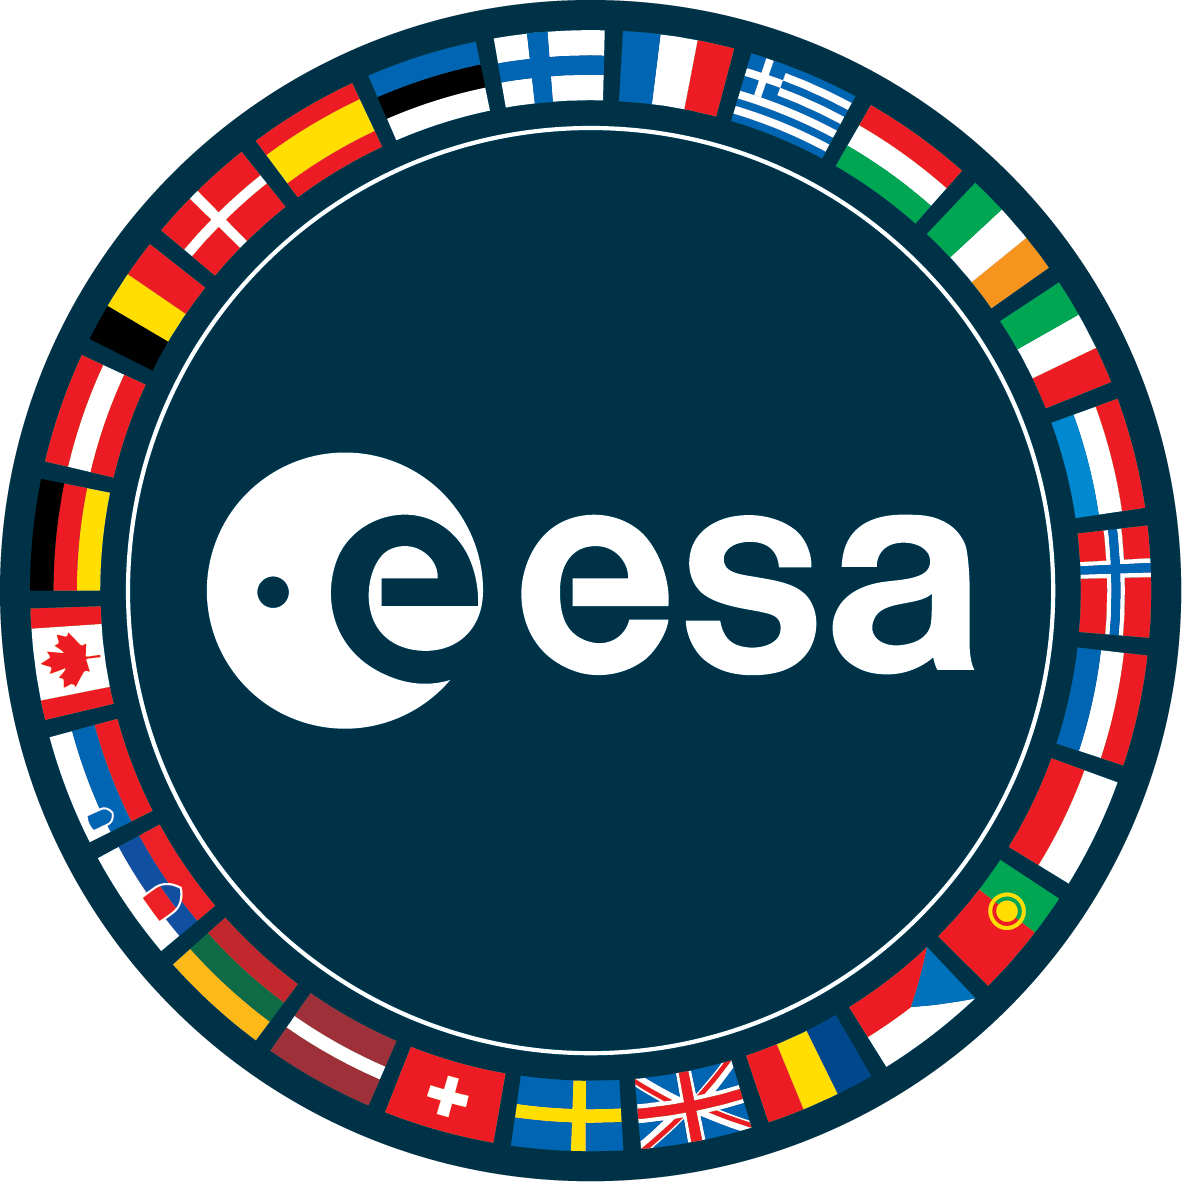 European Space Agency's logo